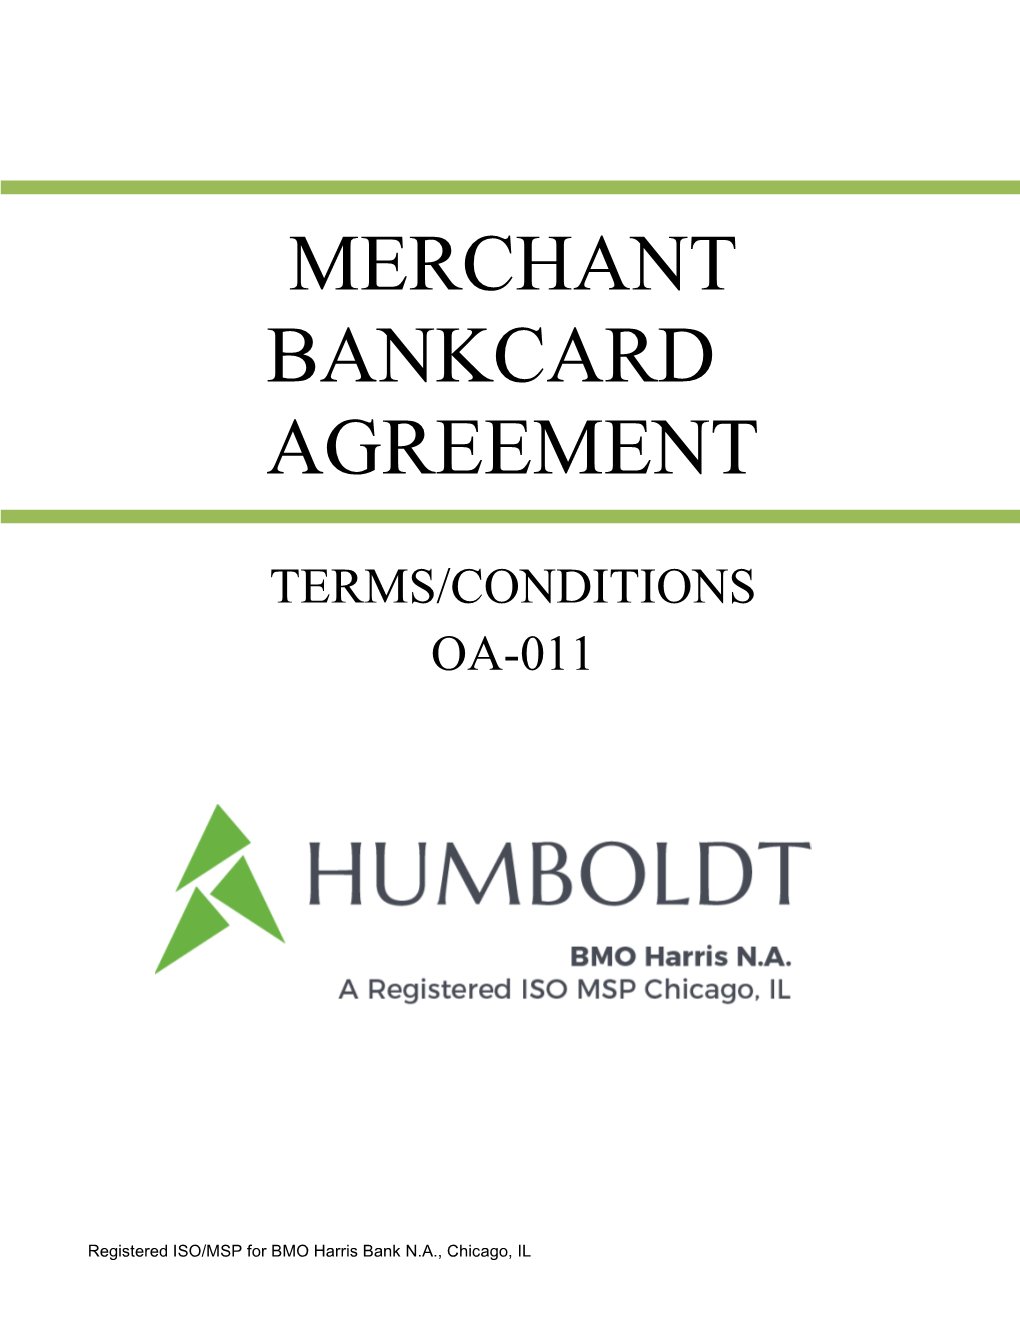 Merchant Bankcard Agreement